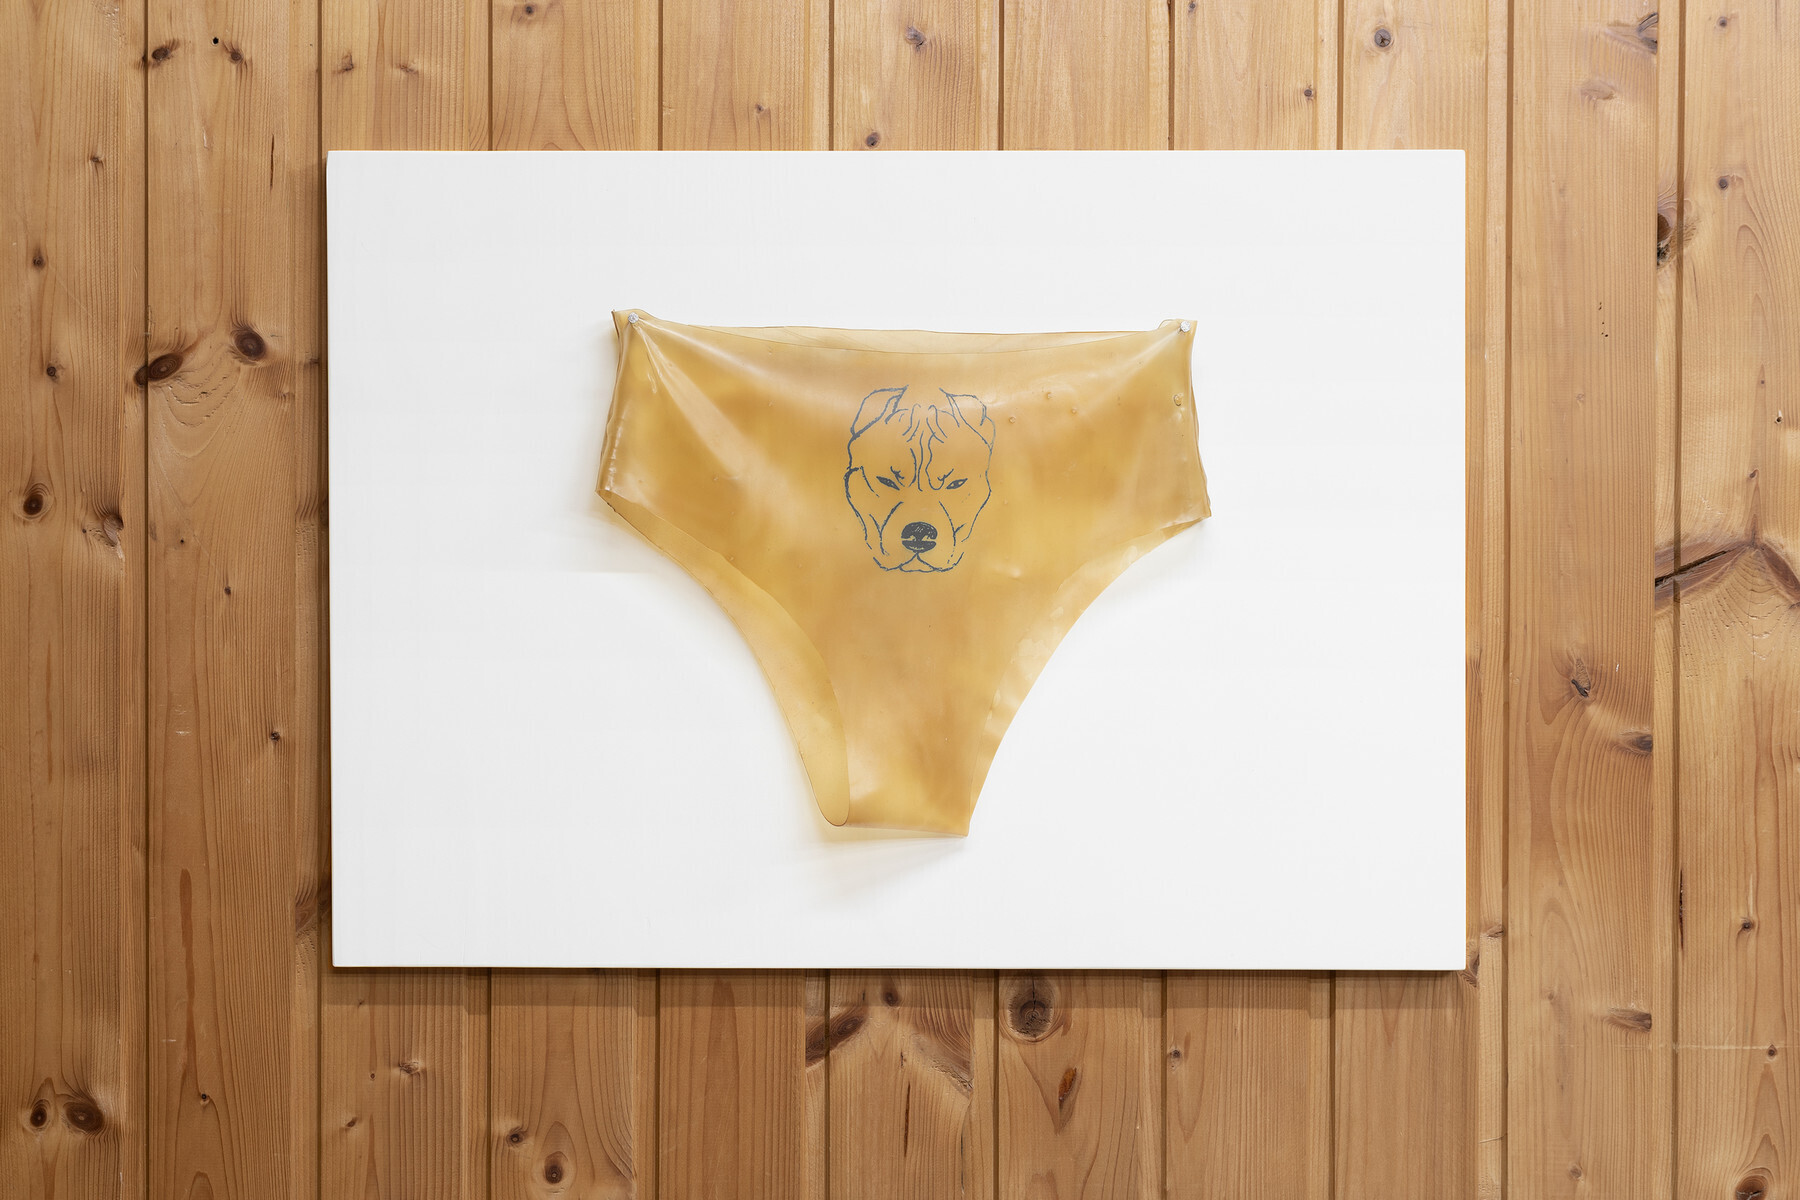 Meltem Rukiye Calisir: Bitch Panty, 2020. Silkscreen print on latex, 38 x 22 cm